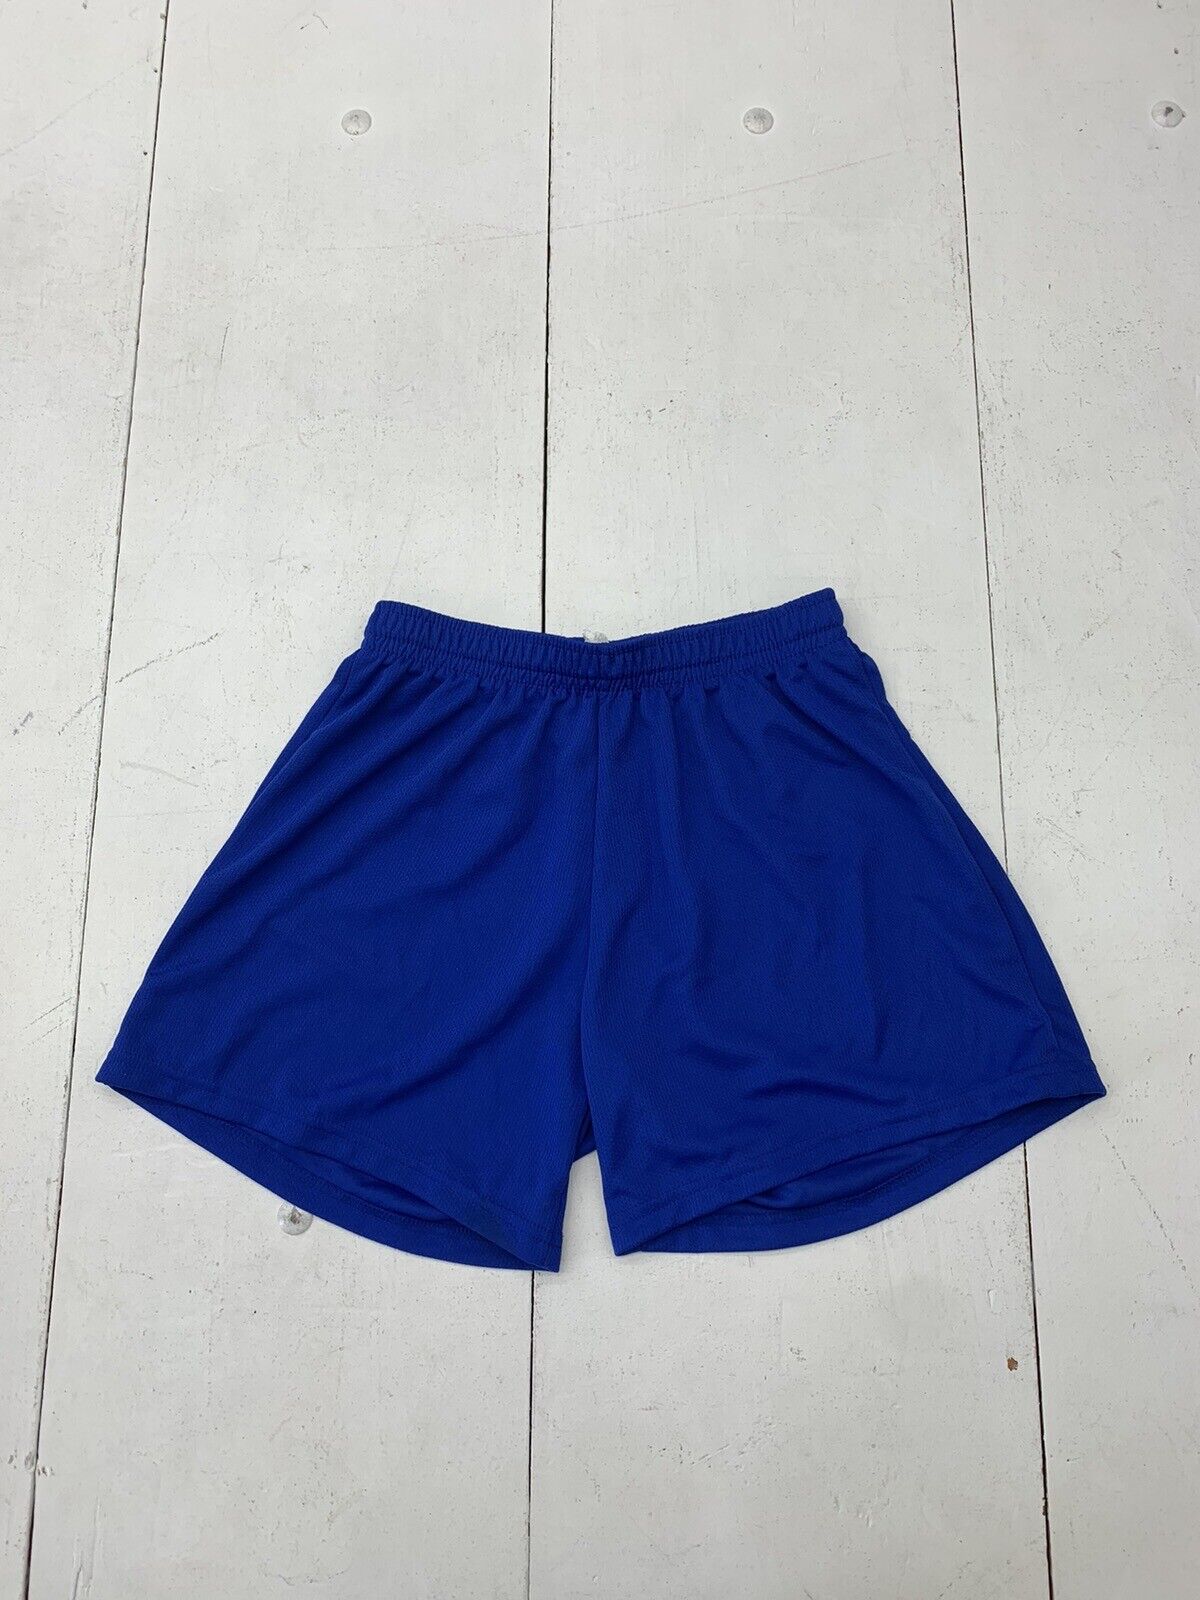 Augusta Sportswear Womens Blue Mesh Athletic Shorts Size Medium